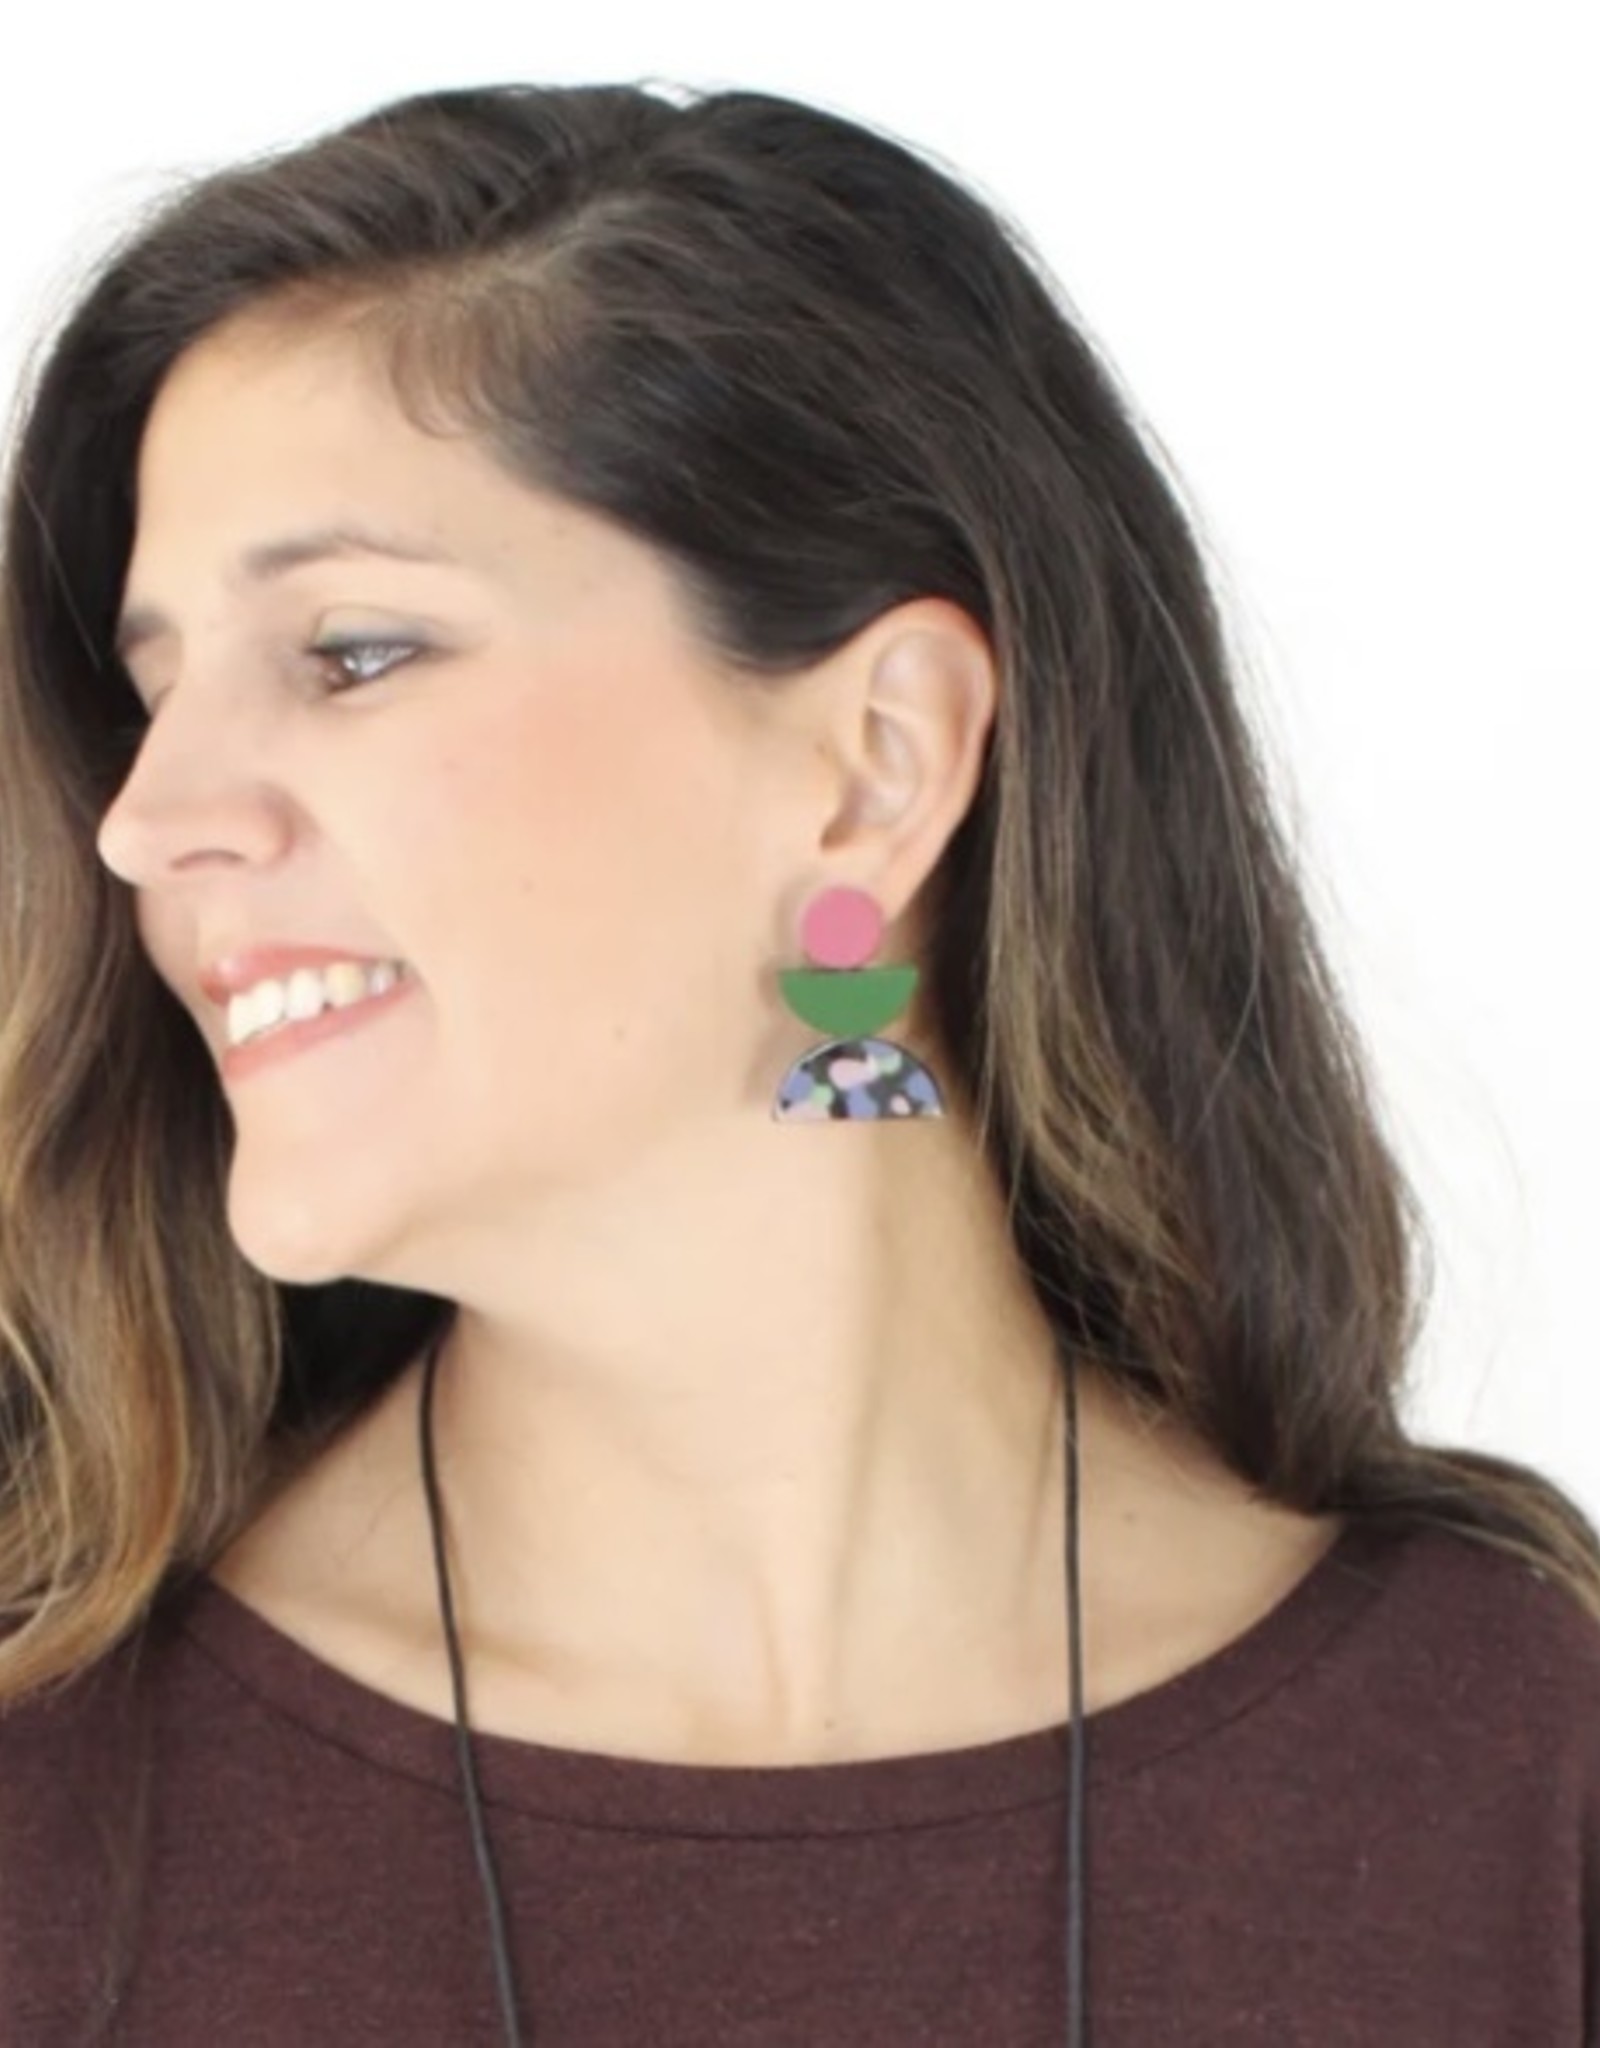 SYLCA Pink & Green Geometric Earrings